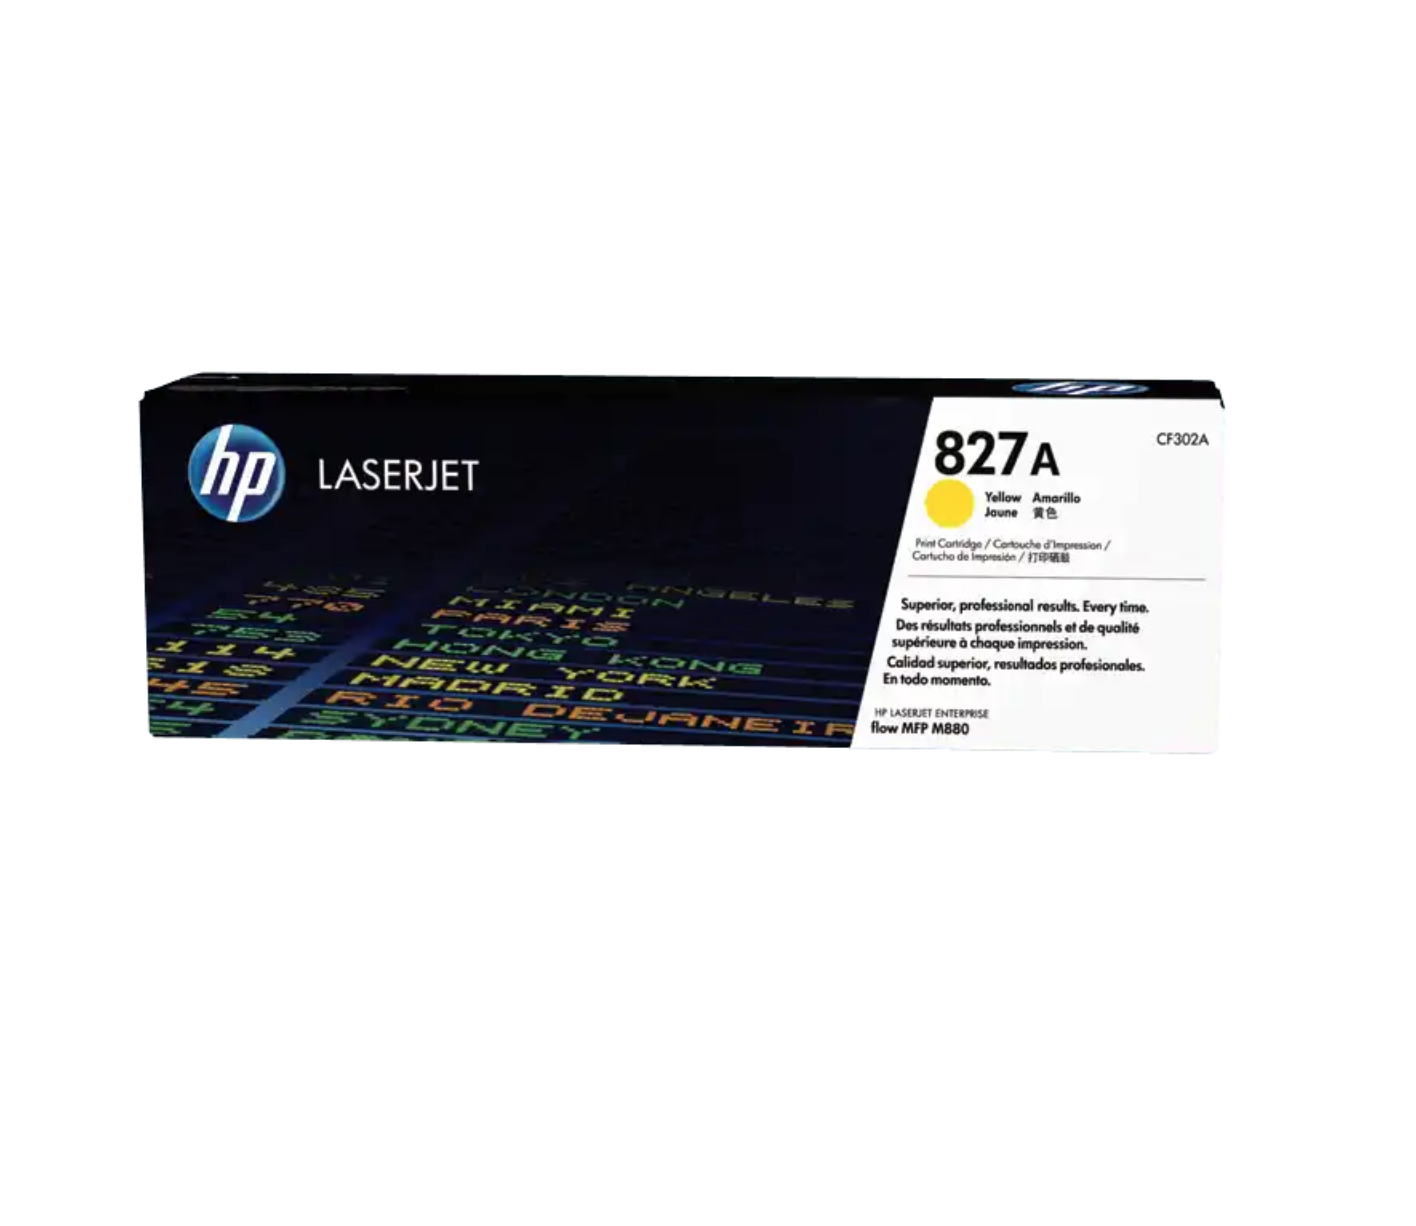 HP 827A 黃色原廠 LaserJet 碳粉 CF302A